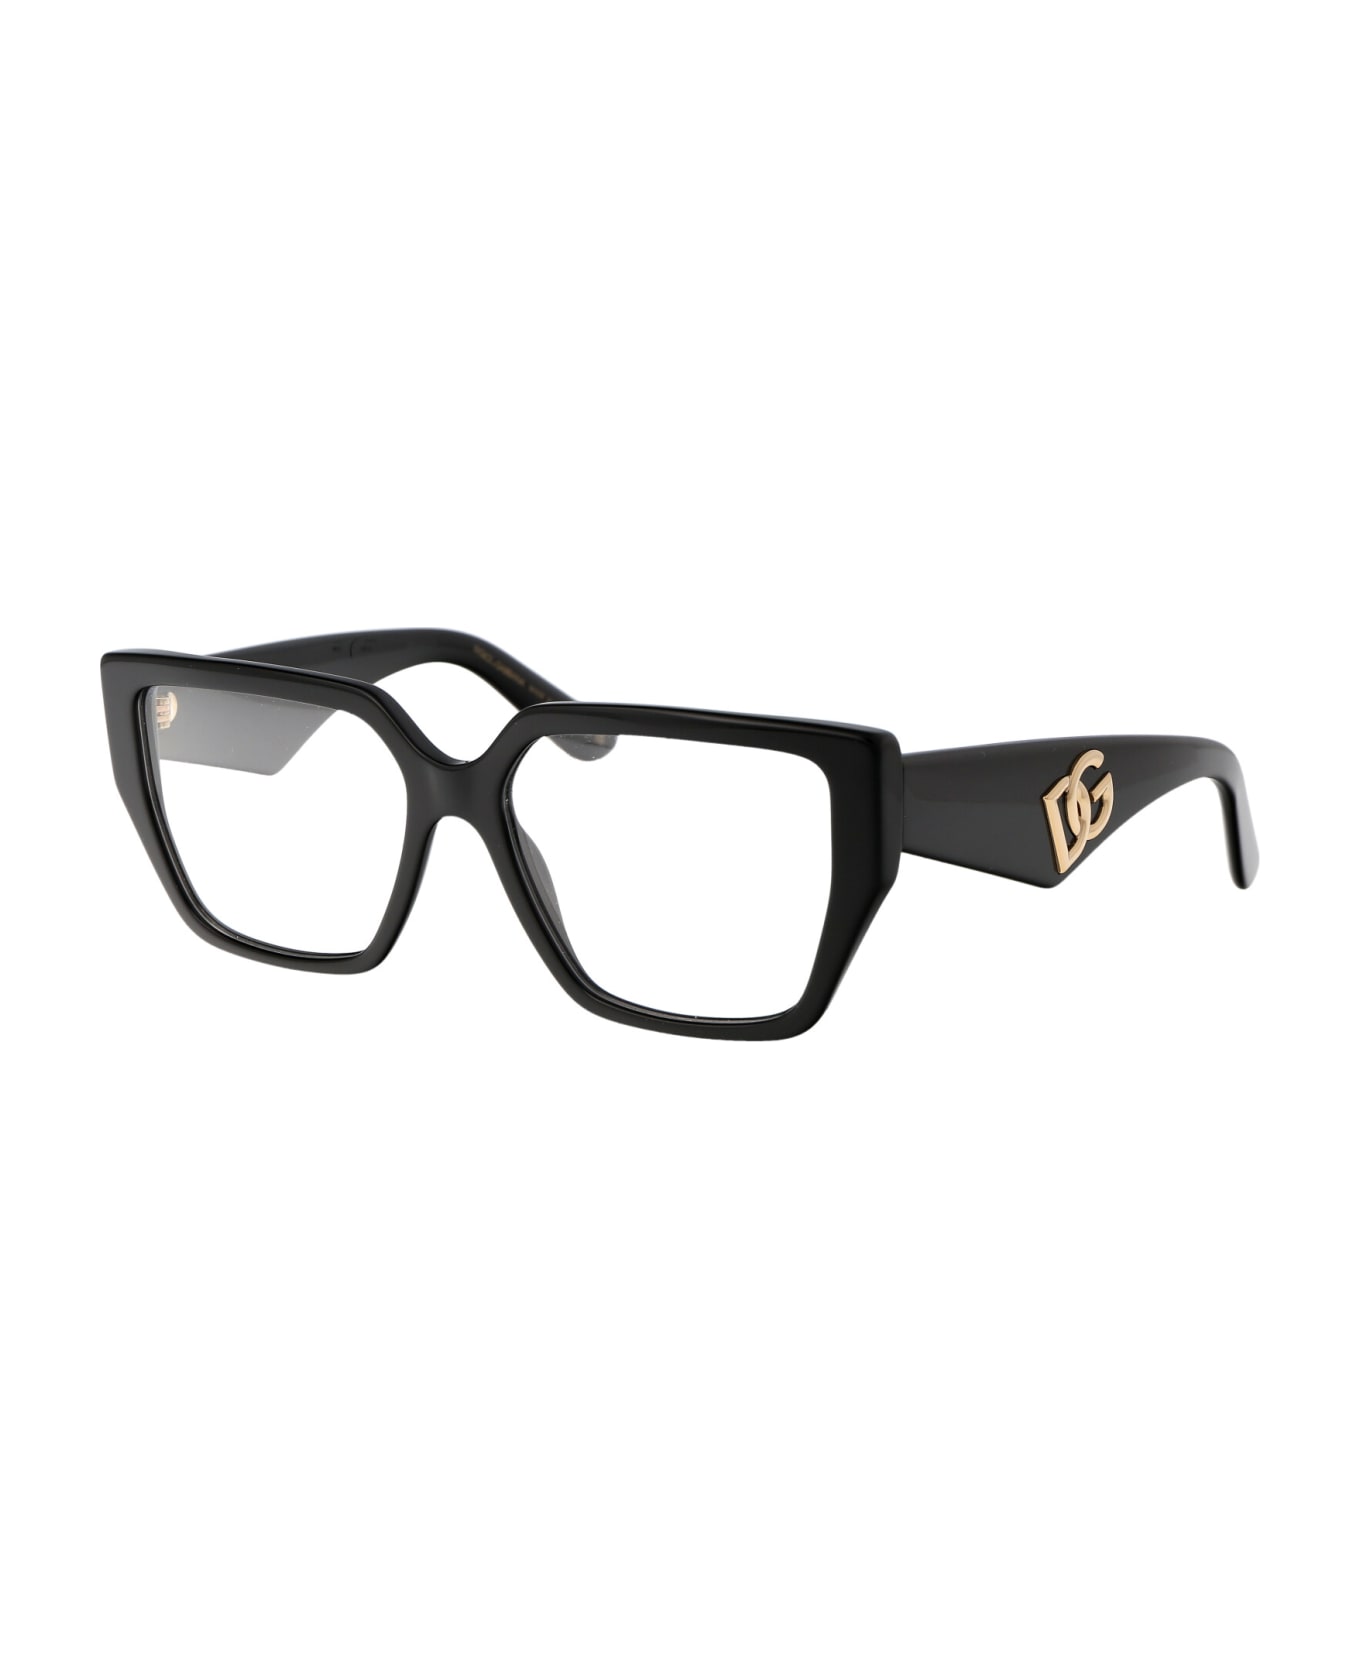 Dolce & Gabbana Eyewear 0dg3373 Glasses - 501 BLACK